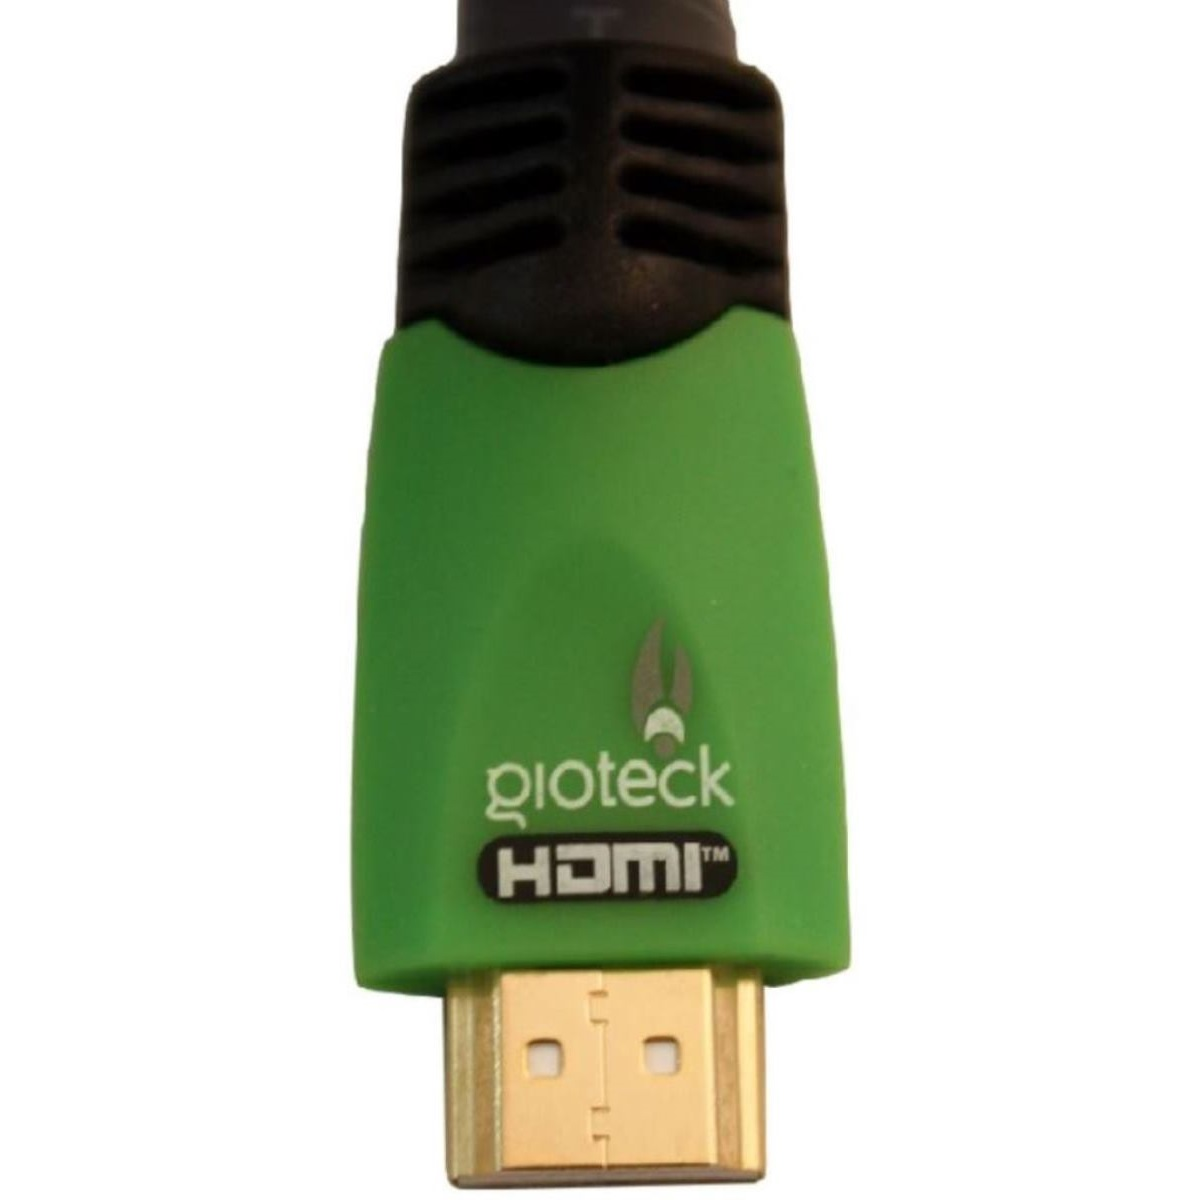 XC-HQ HDMI Kabel, Grün, Speed High GIOTECK Schwarz